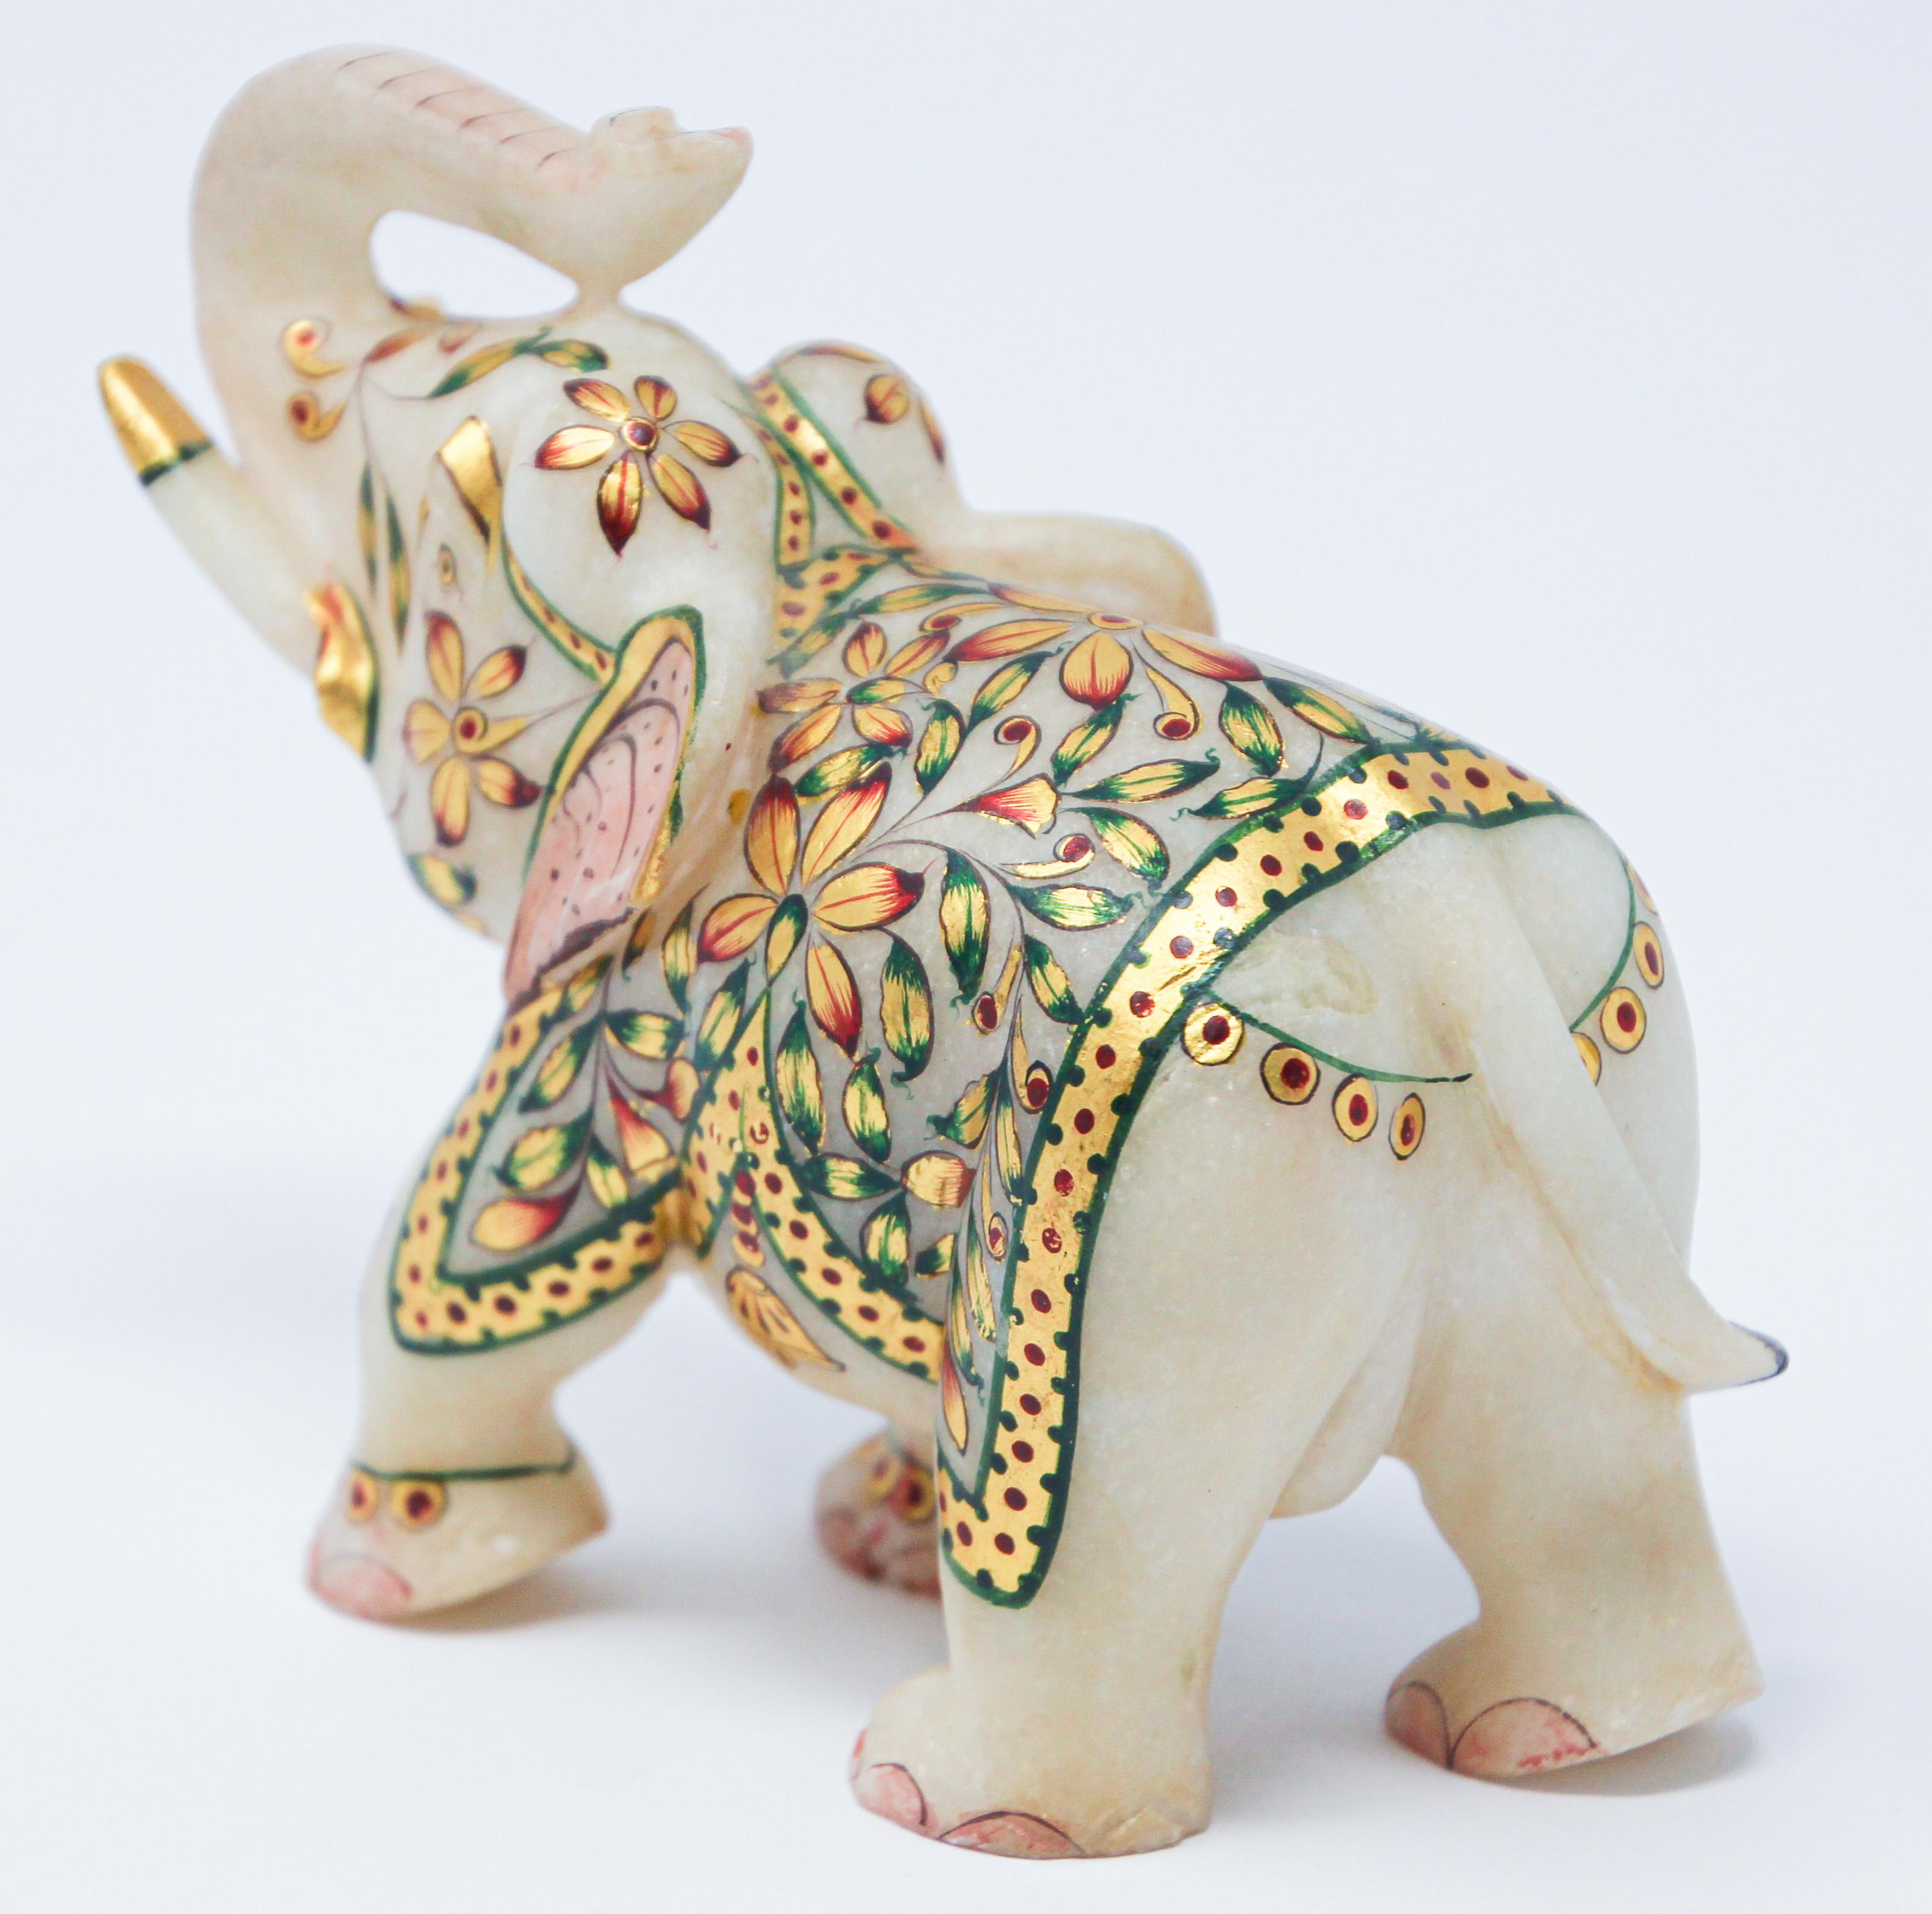 jeweled elephant figurine